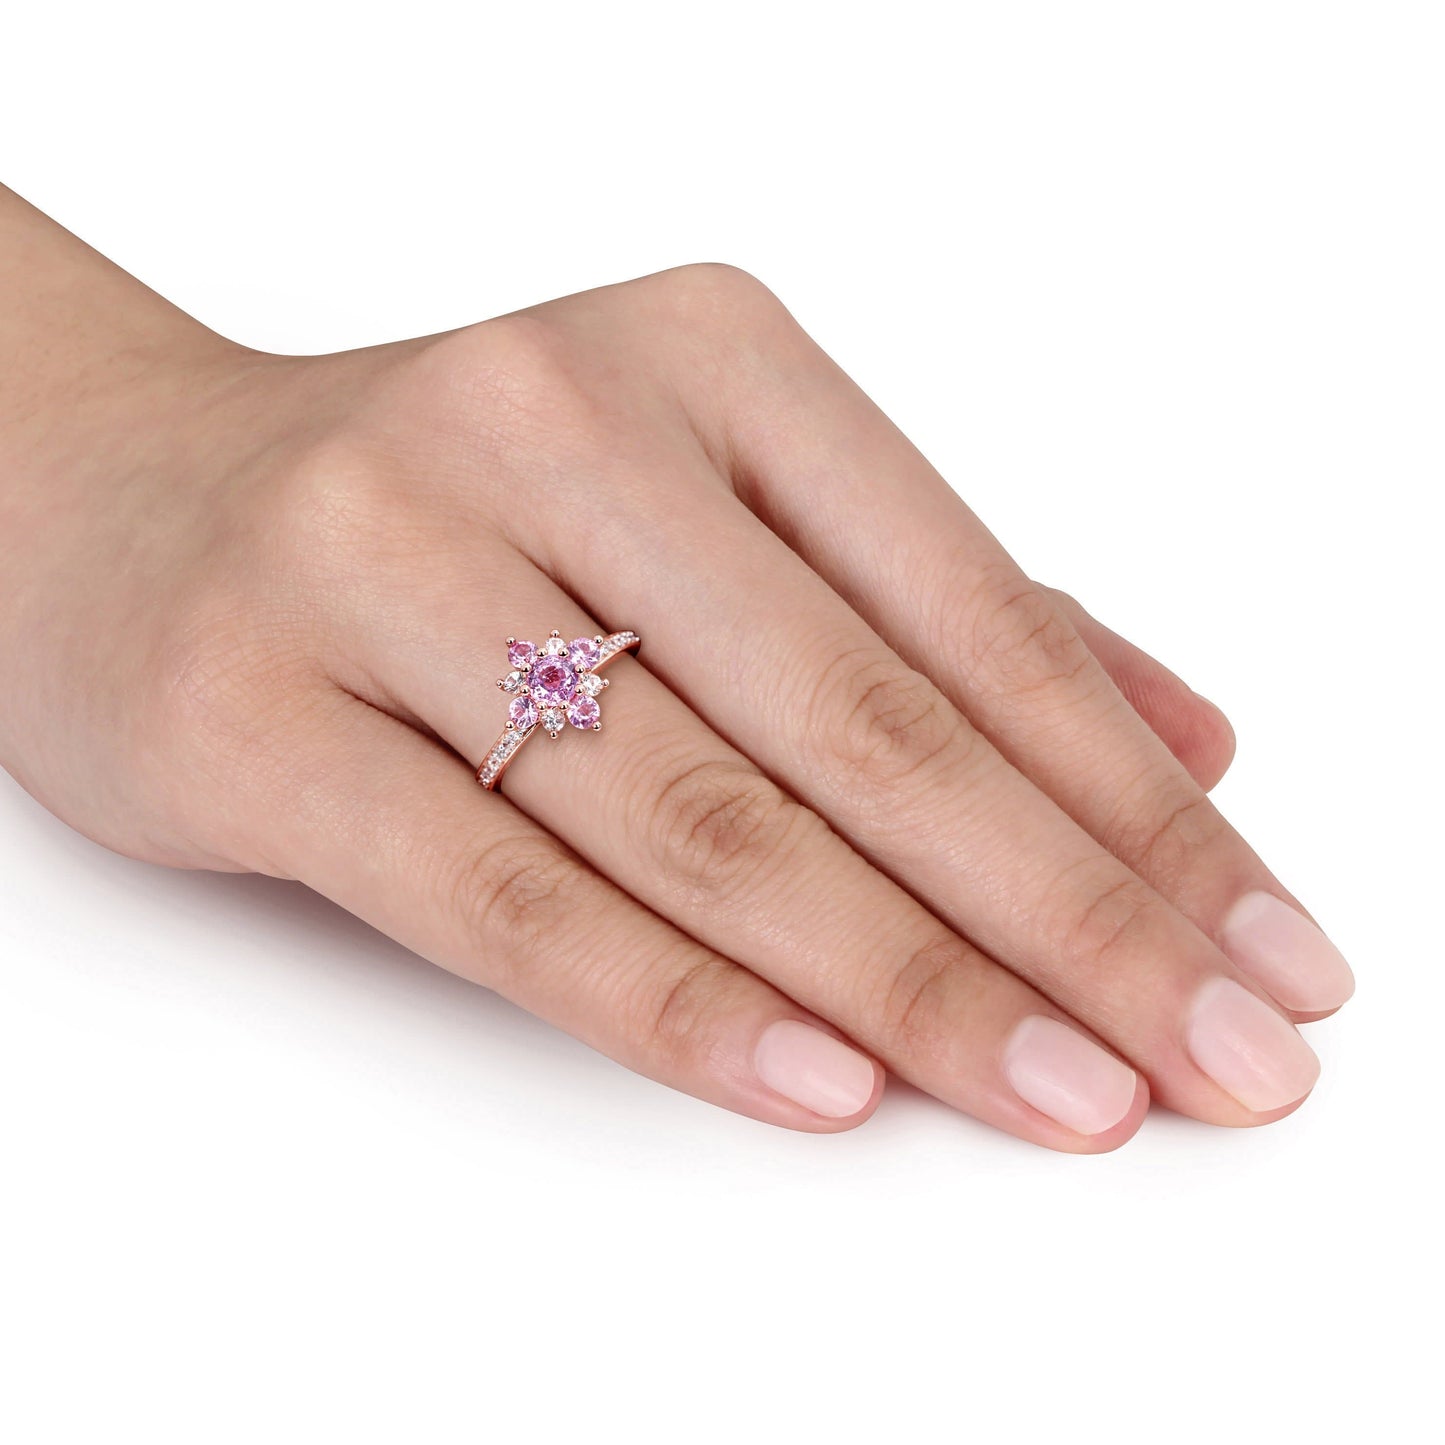 Diamond & Pink & White Sapphire Ring in 14k Rose Gold